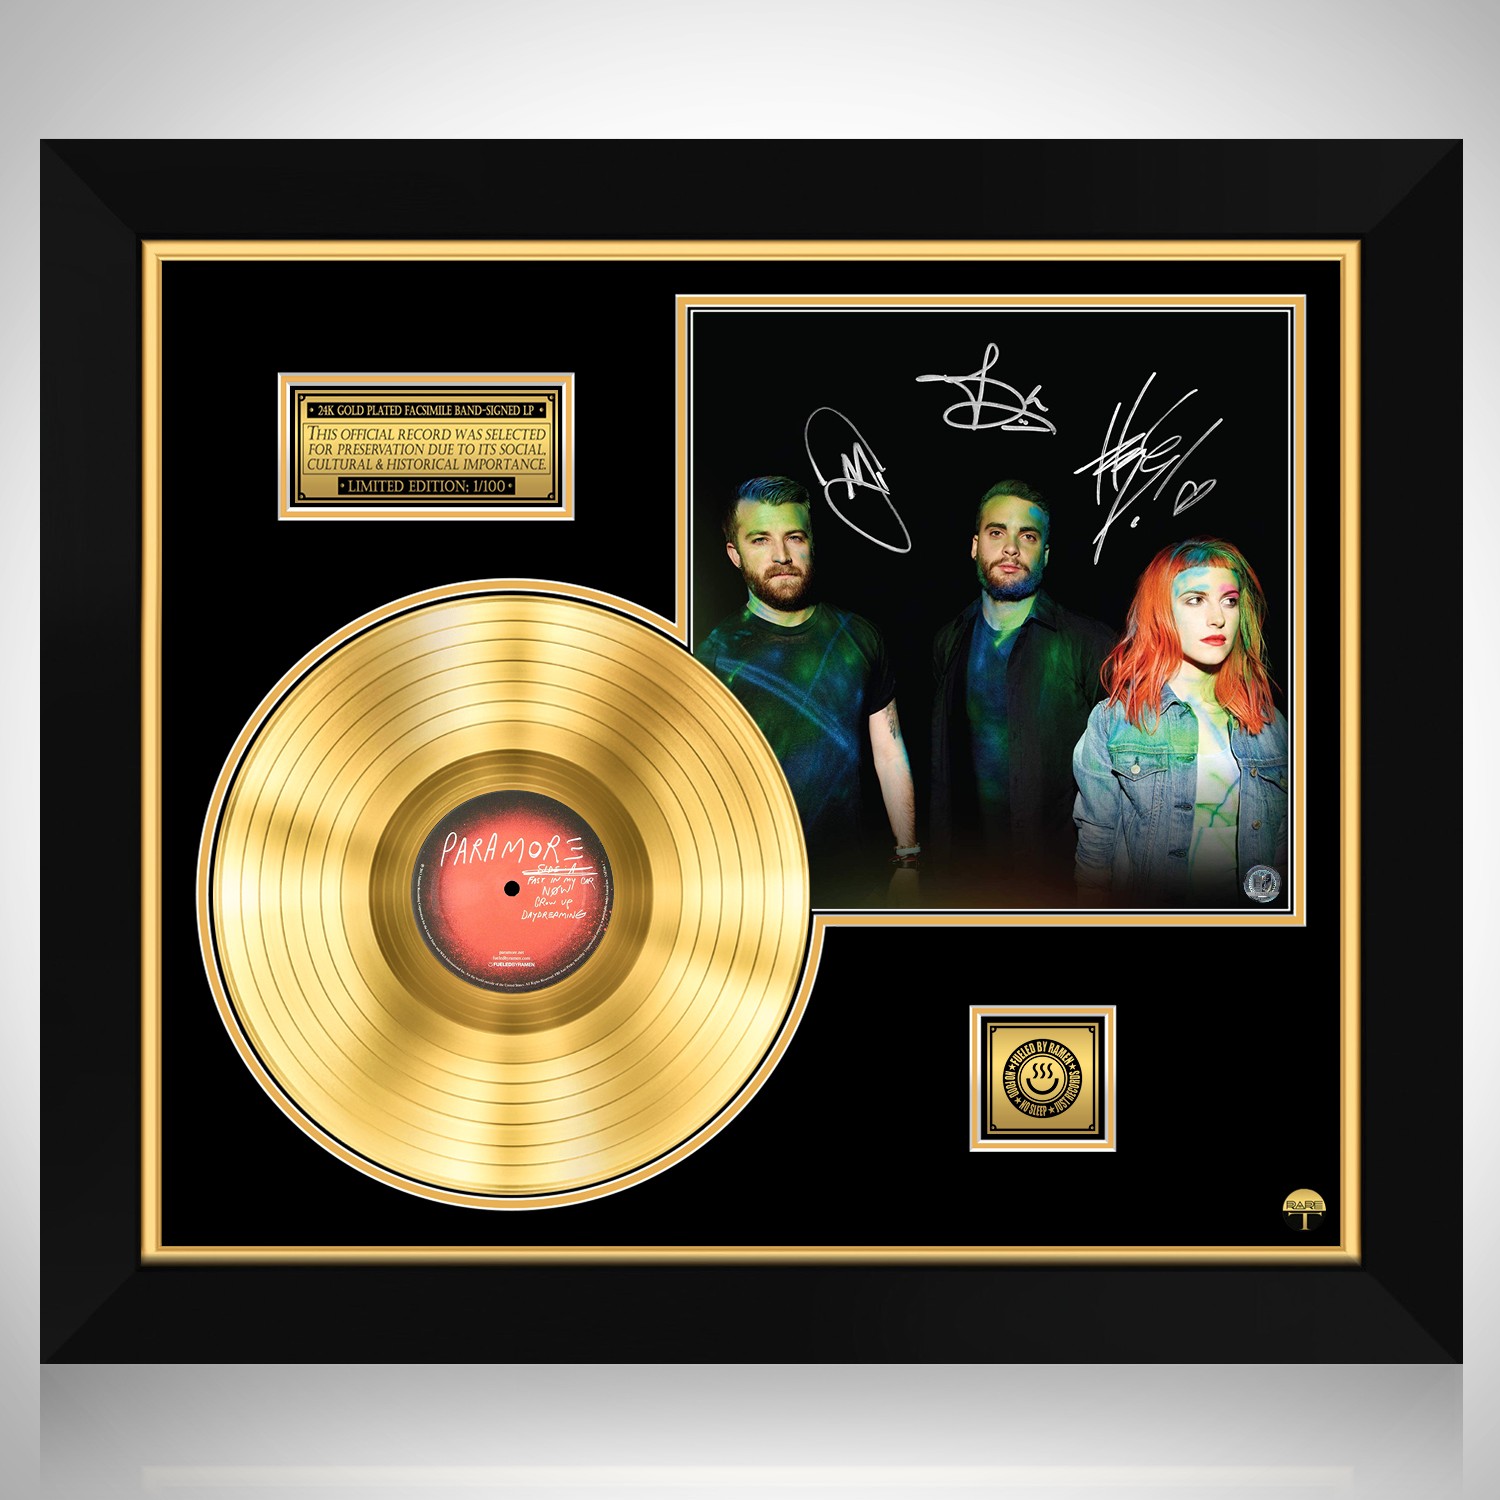 Brand new eyes - Paramore #recordcollection #vinyl #paramore #brandnew